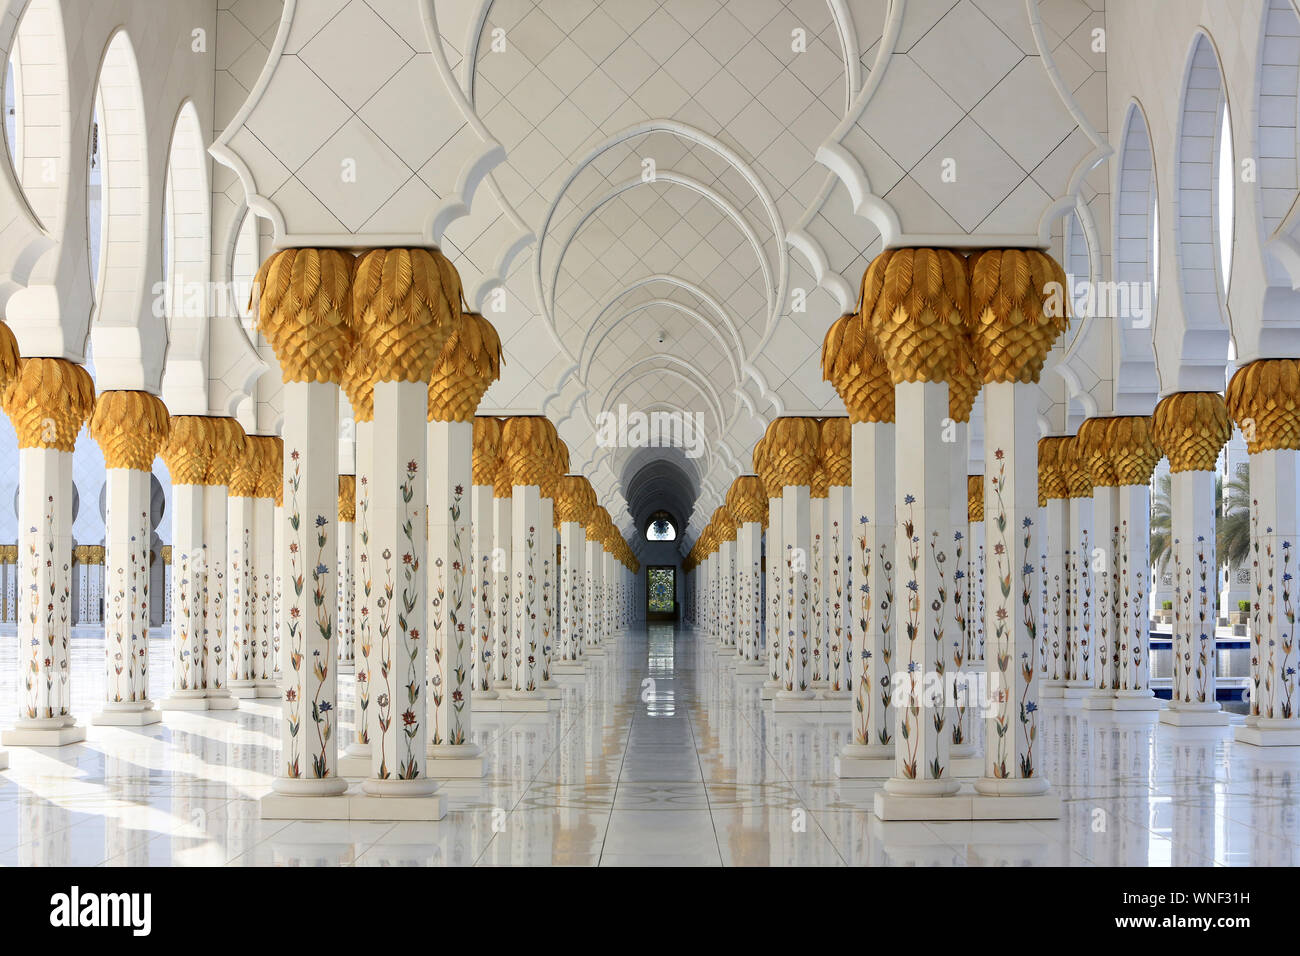 Mosquée Sheikh Zayed. 1995. Abou Dhabi. / La Mosquée Sheikh Zayed. 1995. Émirat d'Abu Dhabi. Banque D'Images